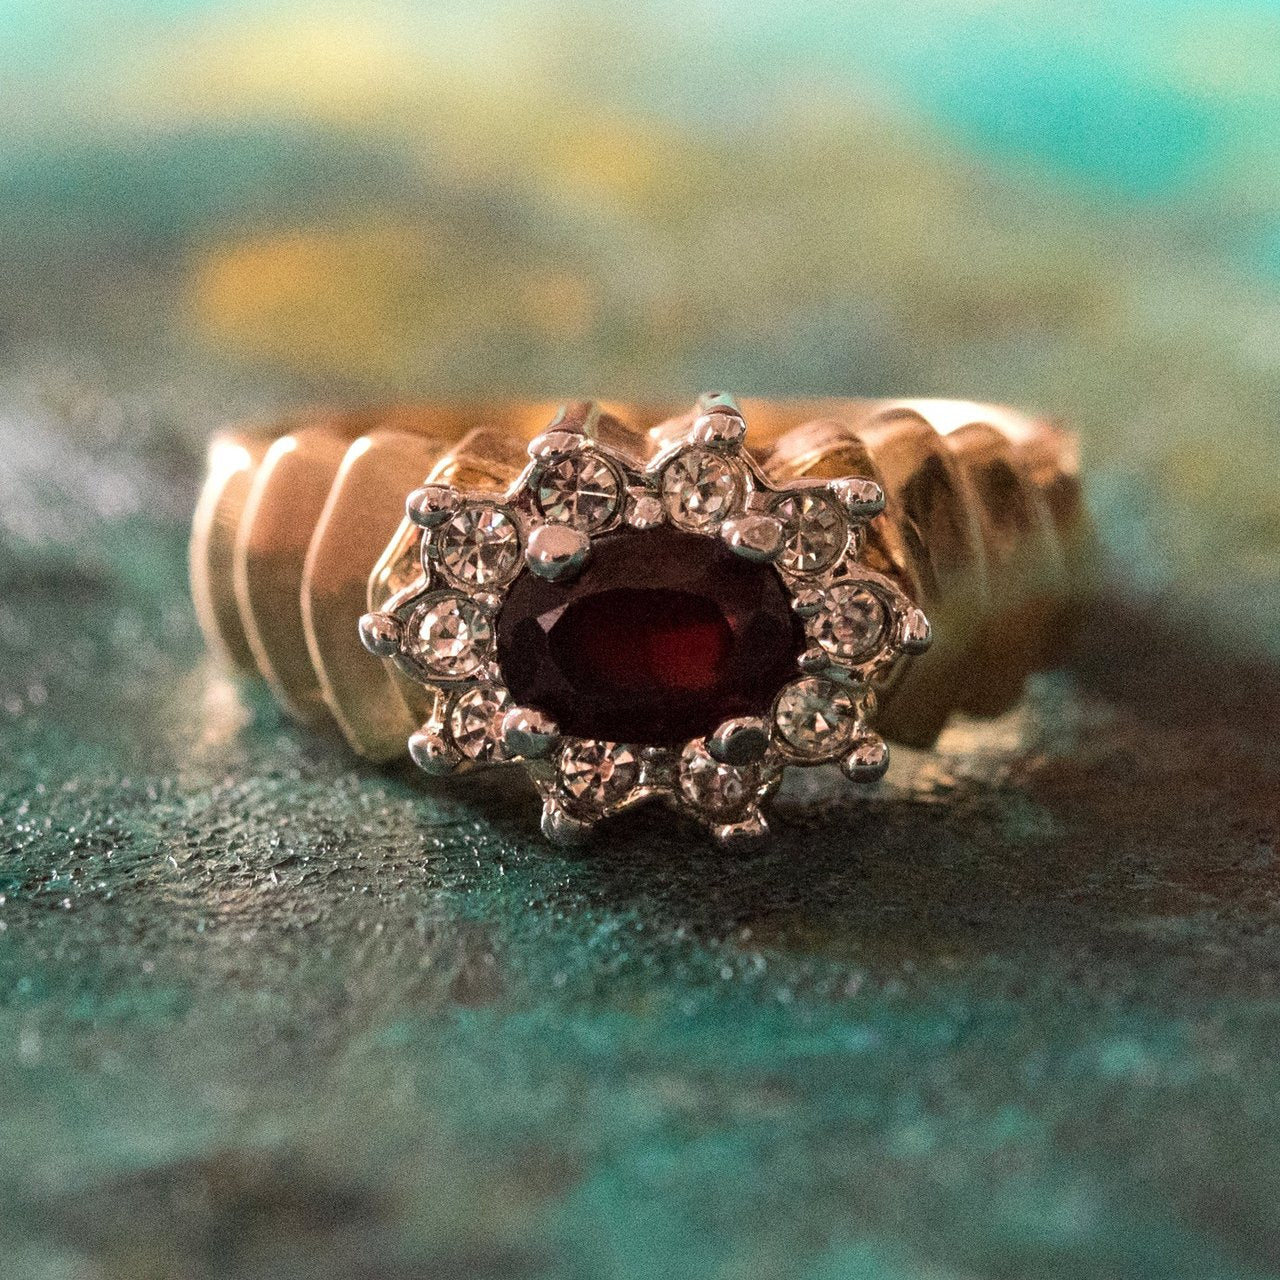 Vintage Ring Genuine Garnet and Clear Swarovski Crystals 18kt Gold Electroplated Band January Birthstone